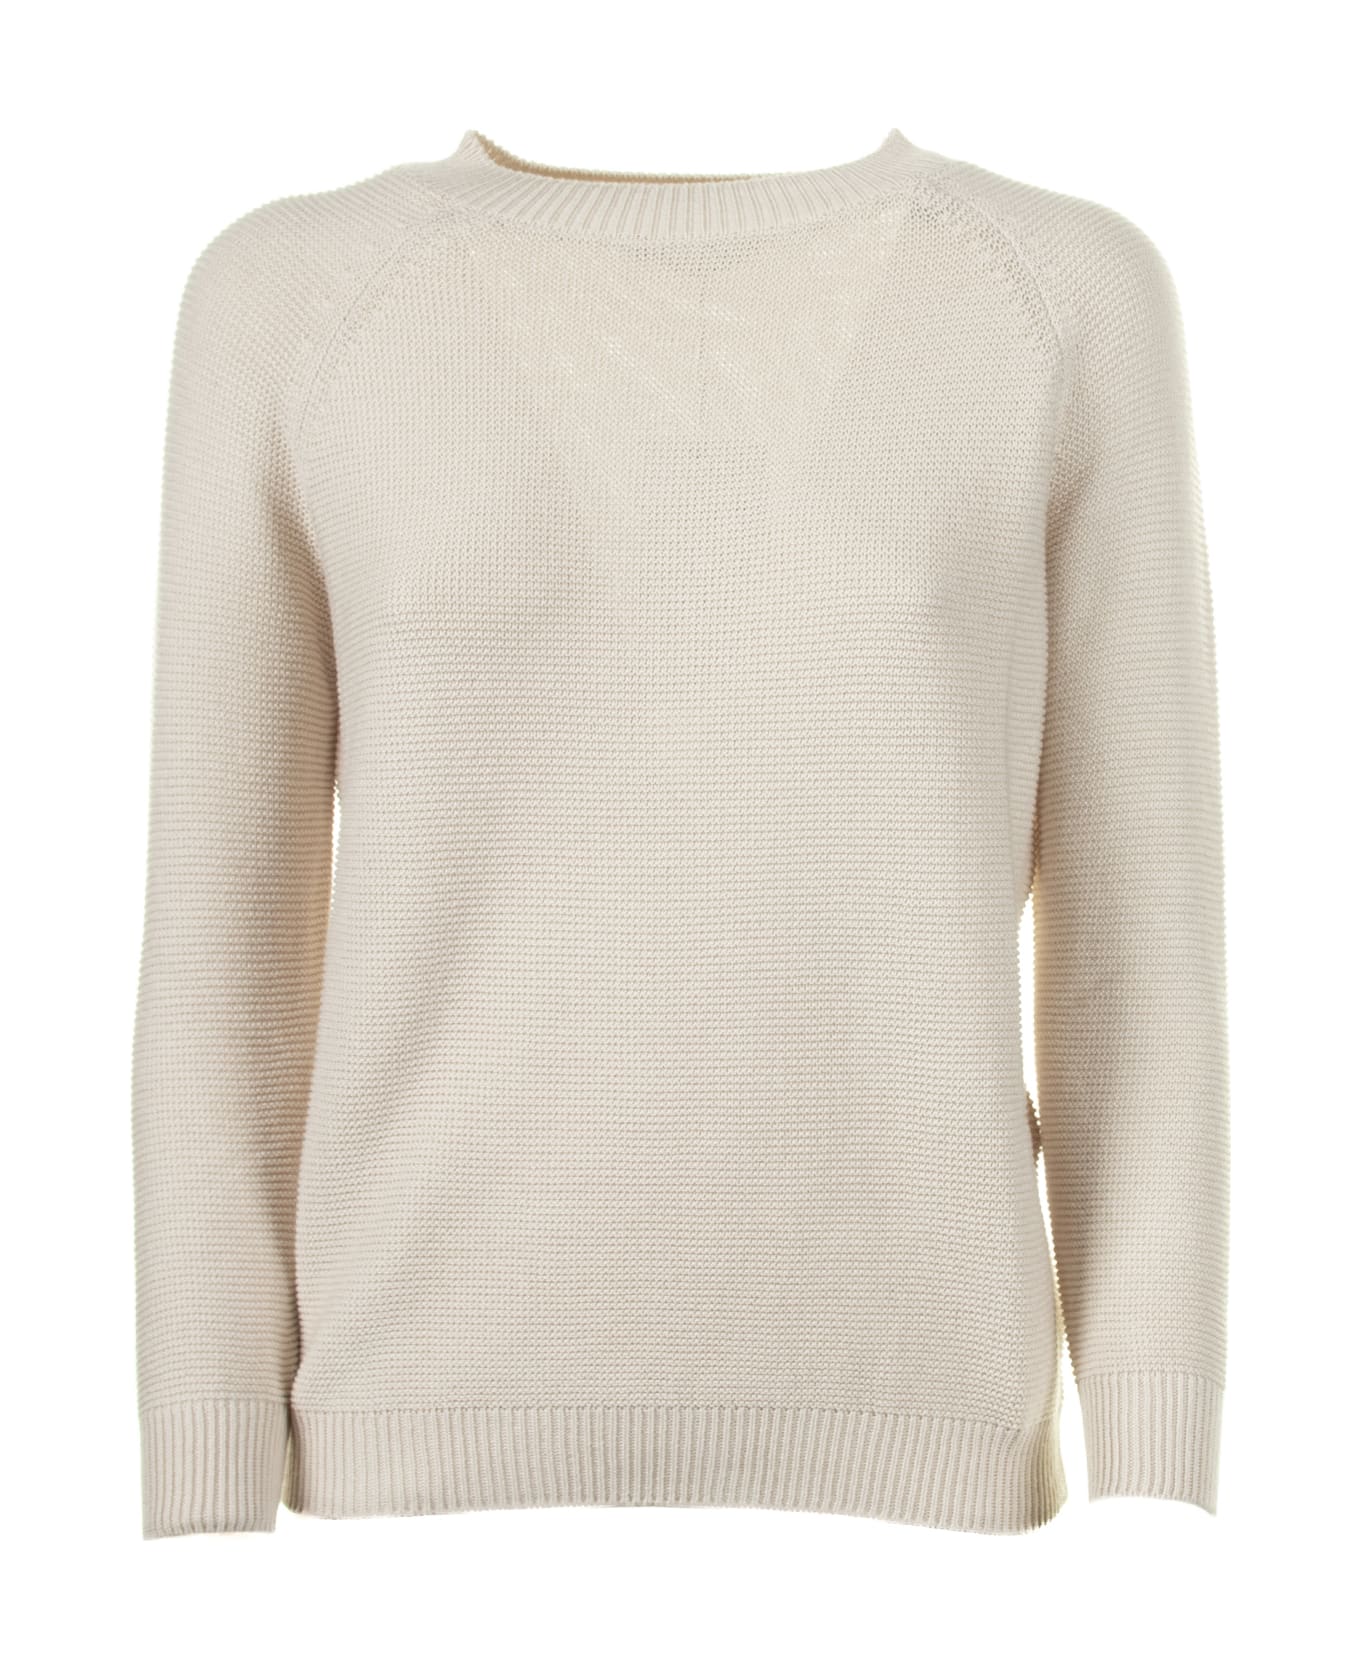 Weekend Max Mara Soft White Cotton Sweater - AVORIO